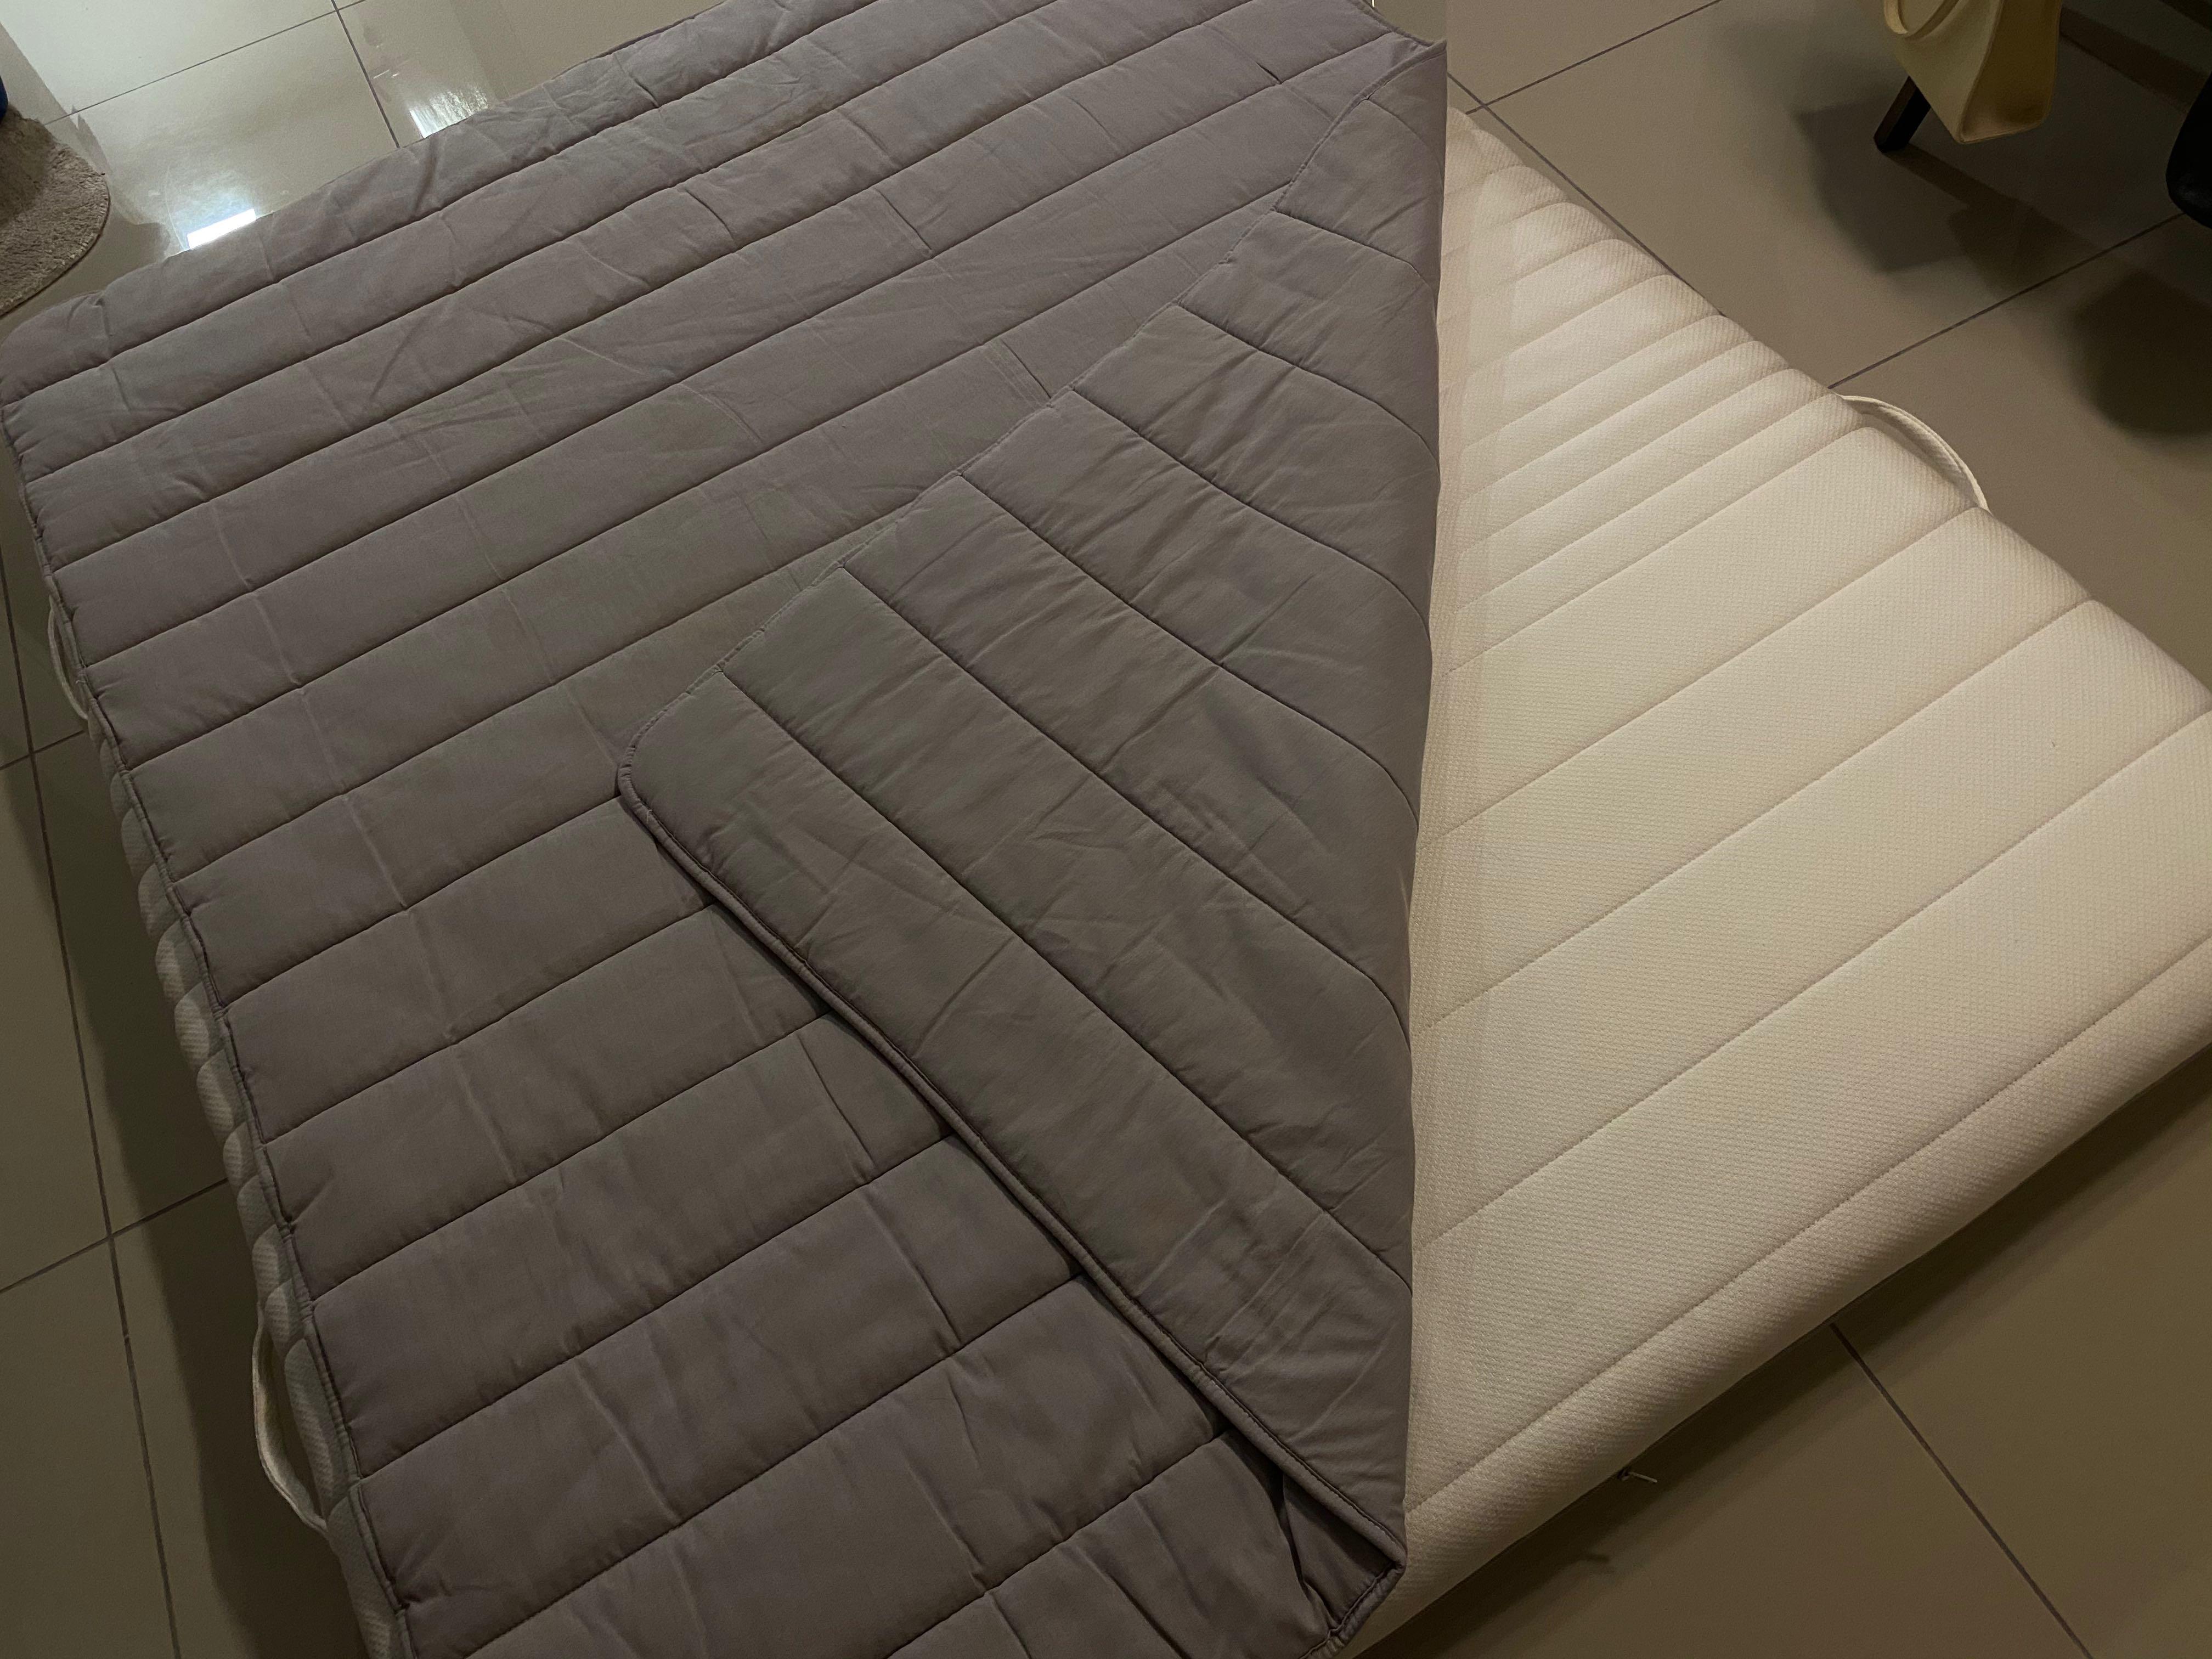 sultan favang mattress size